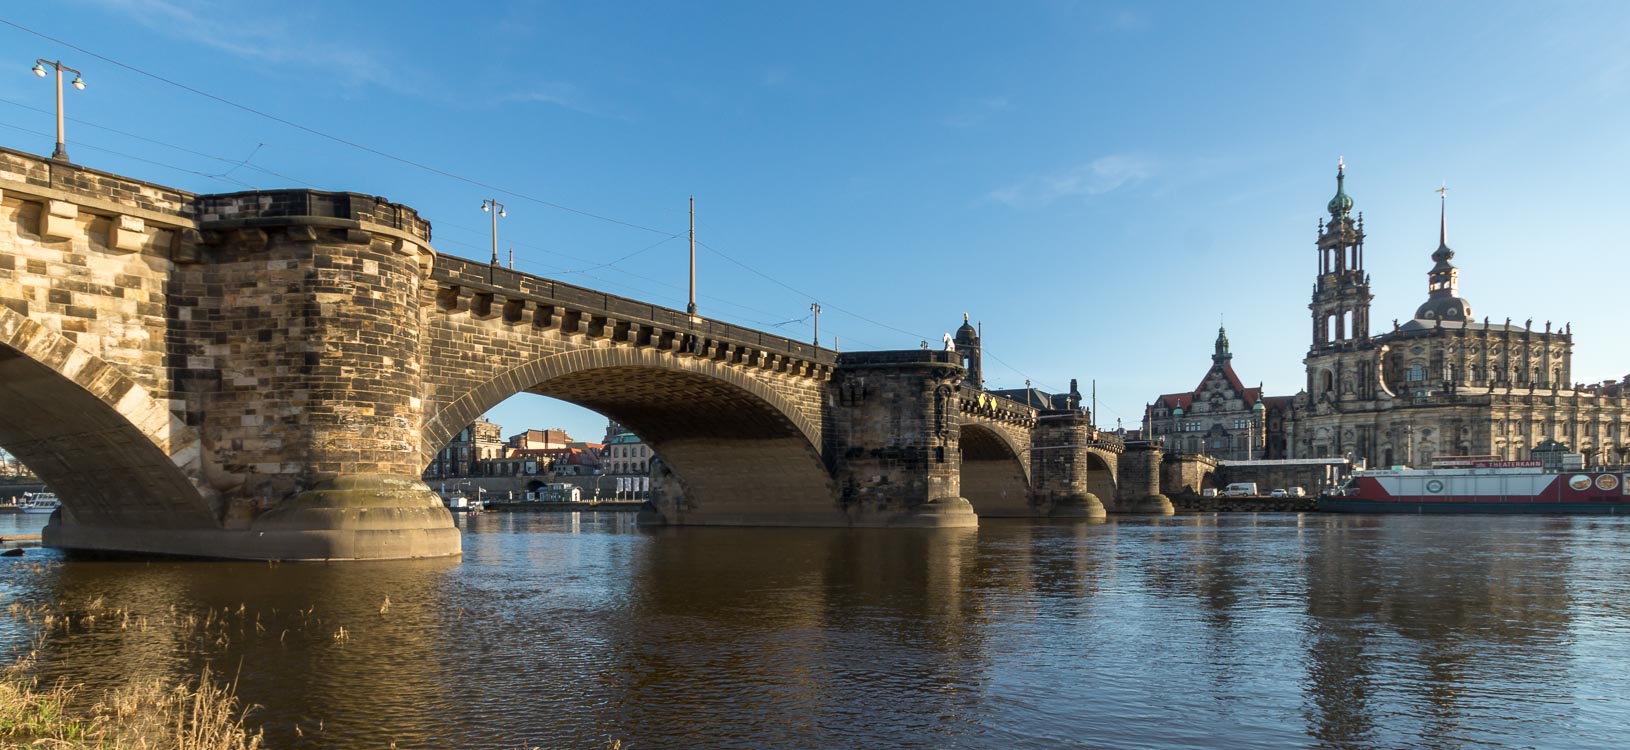 Augustusbrücke pano